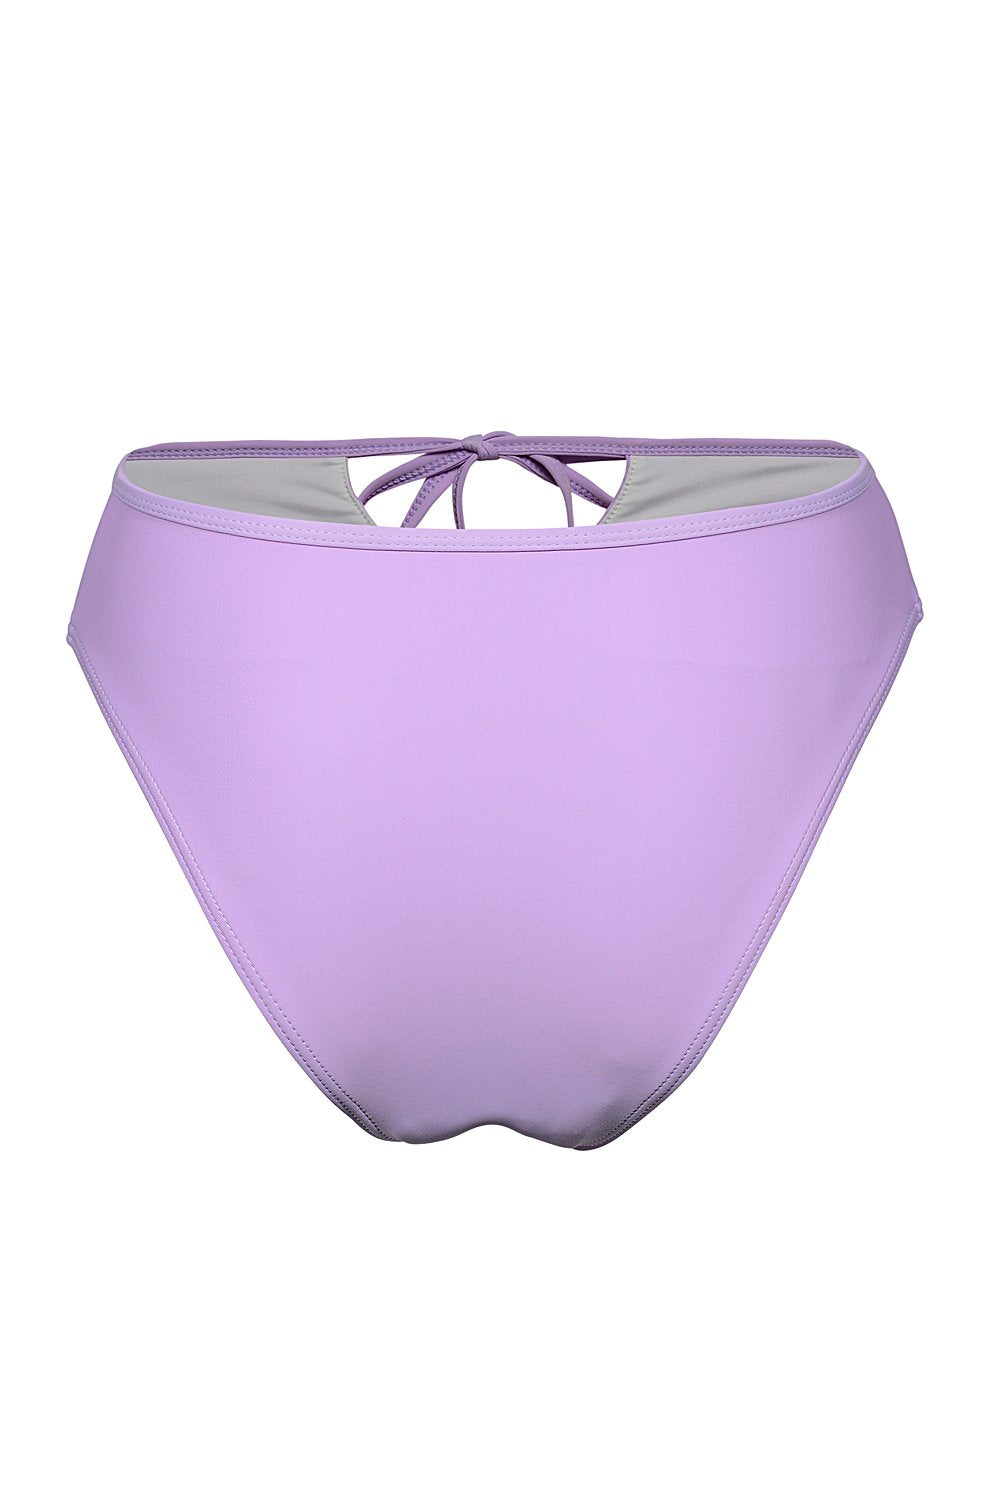 tie front bottom beach bikini in lilac back view